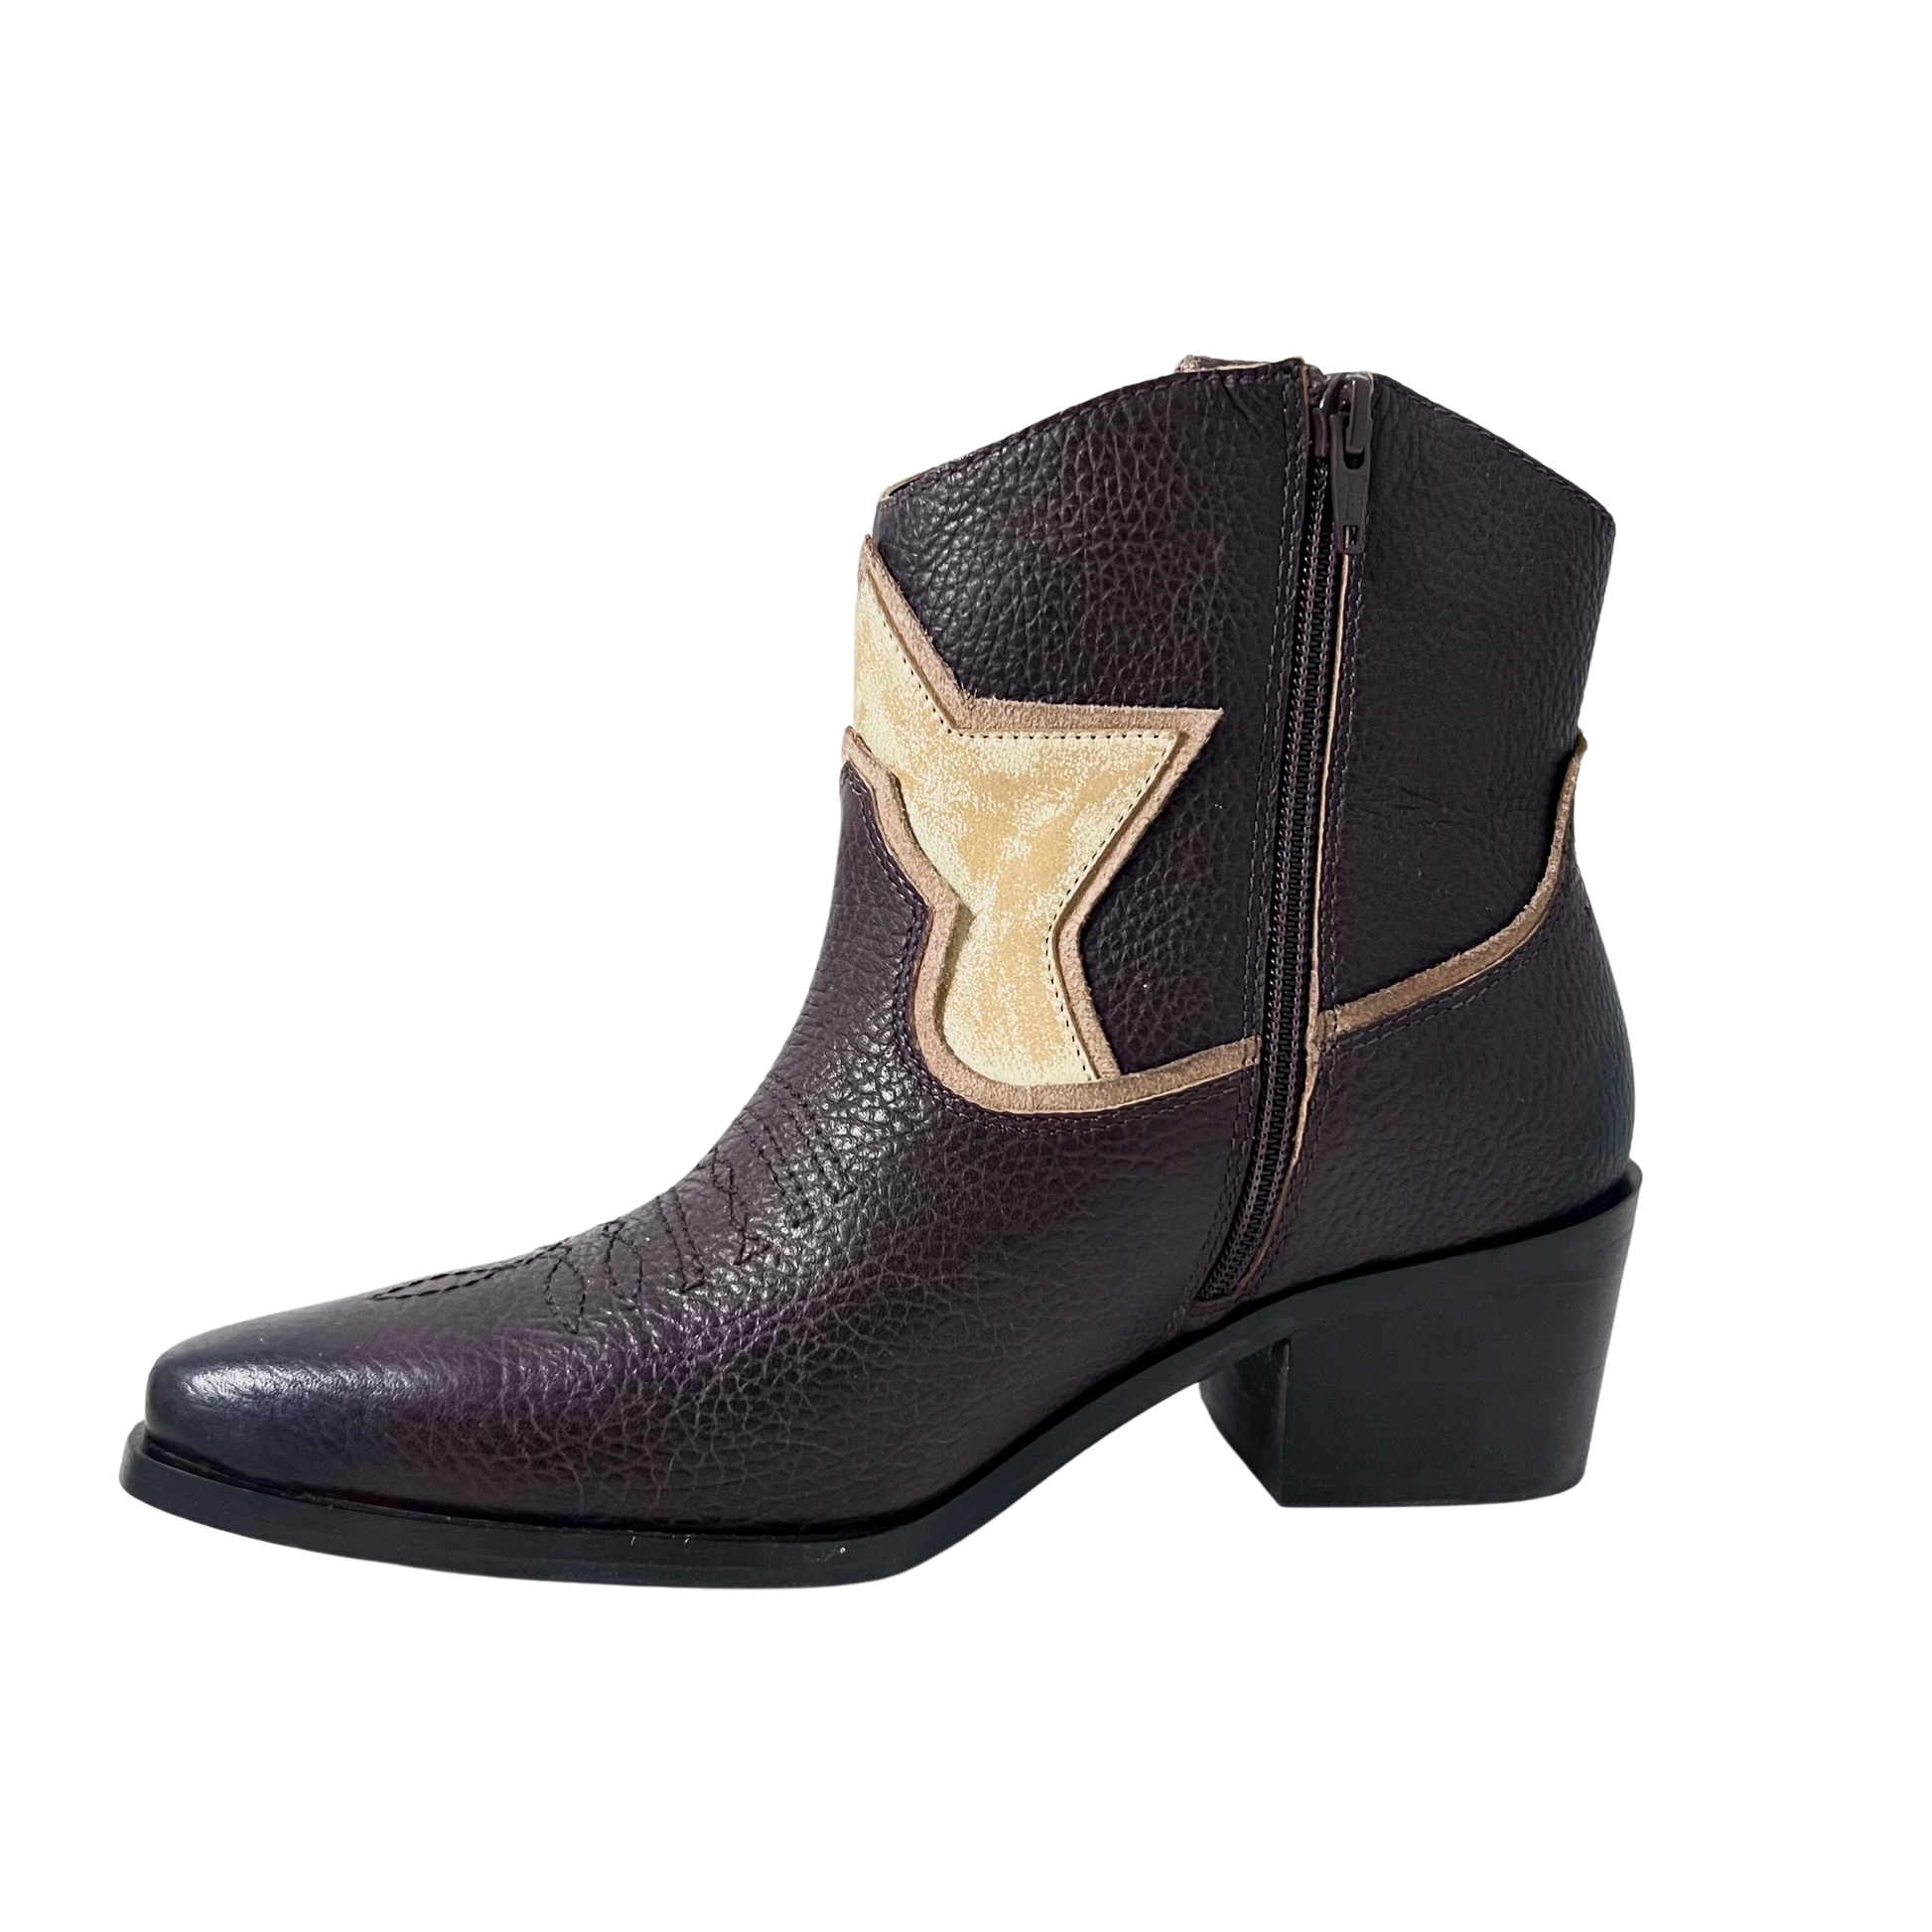 designer star western leather ladies boot in brown color